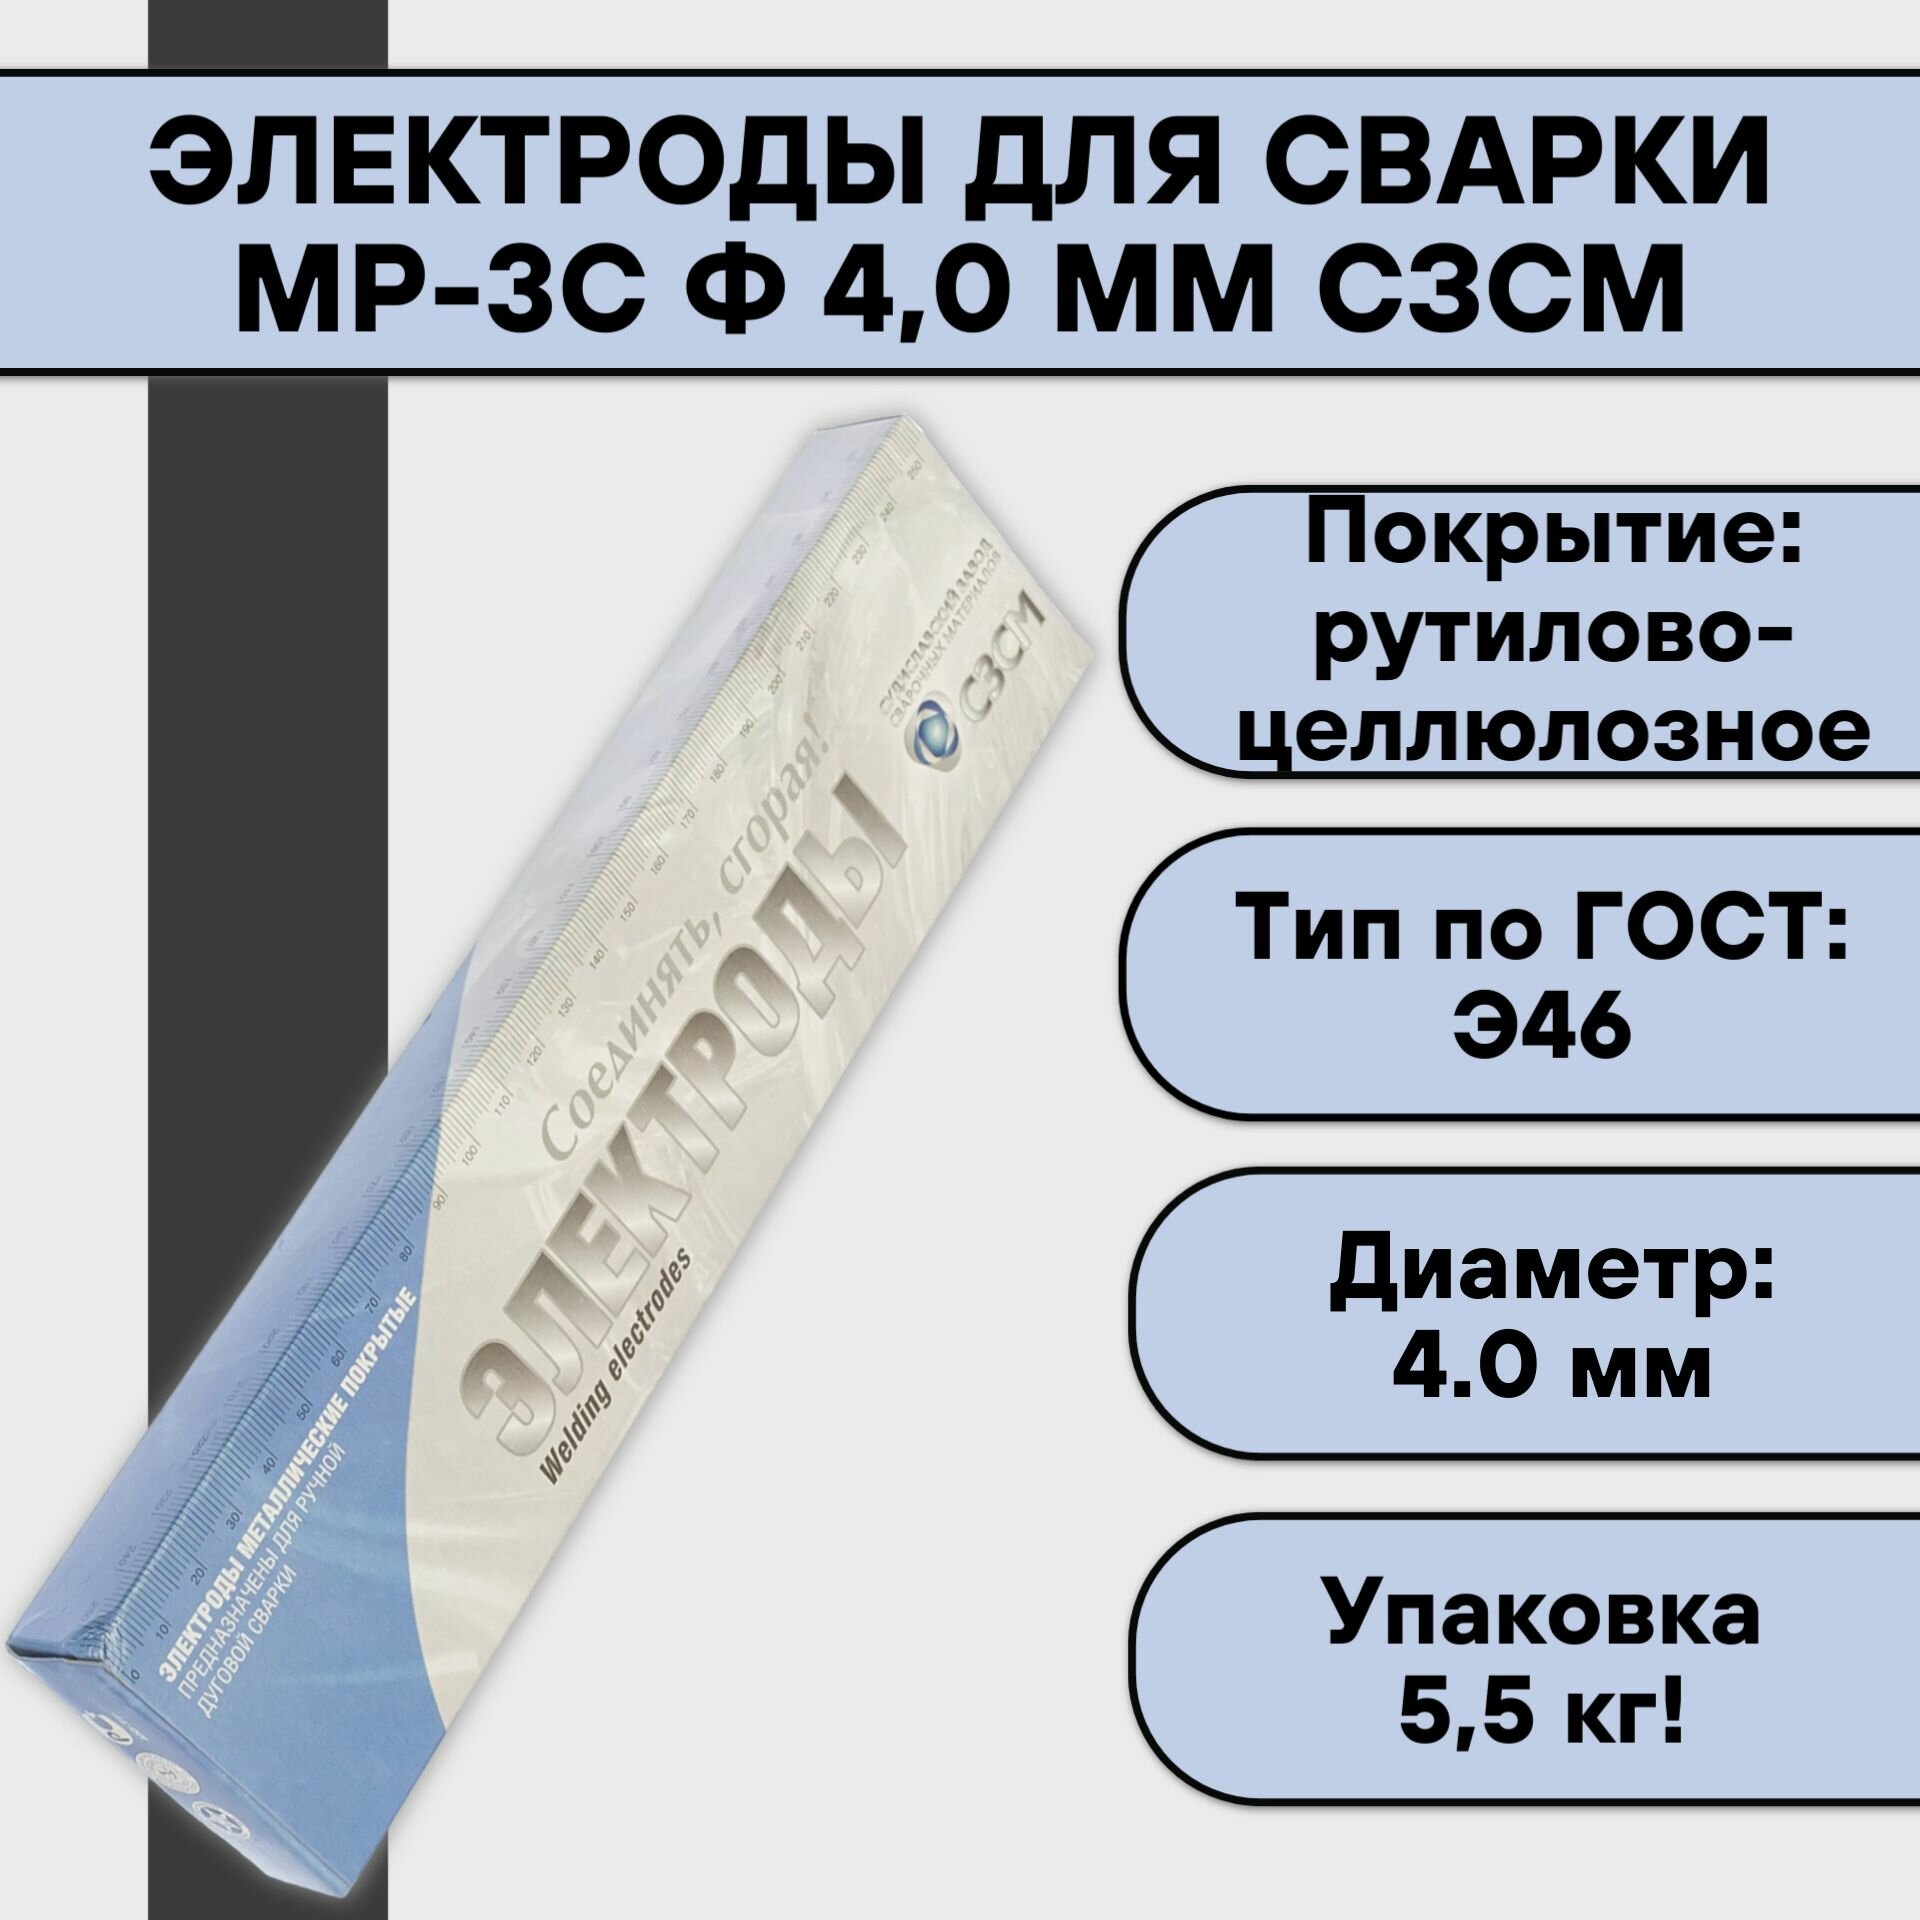 Электроды для сварки ОЗС-12 ф 4,0 мм (5,5 кг) сзсм